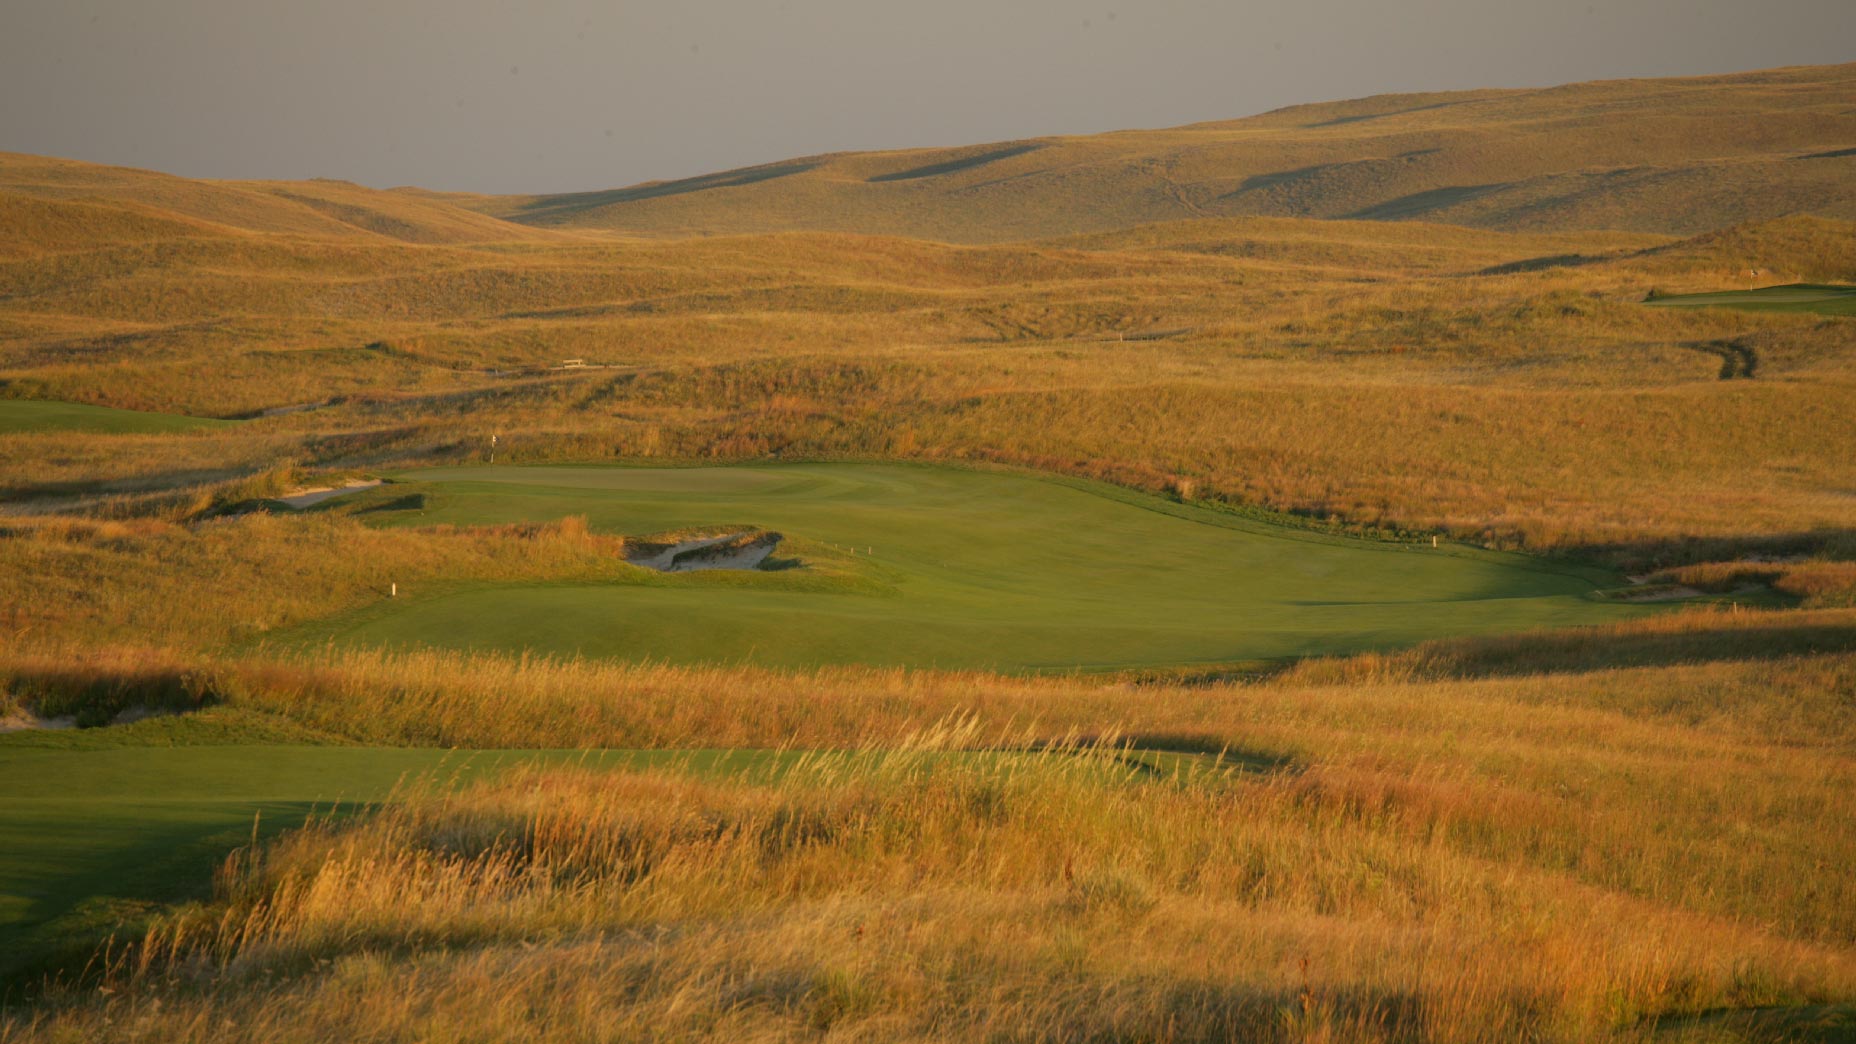 The 11th hole at Sand Hills Golf Club in Nebraska